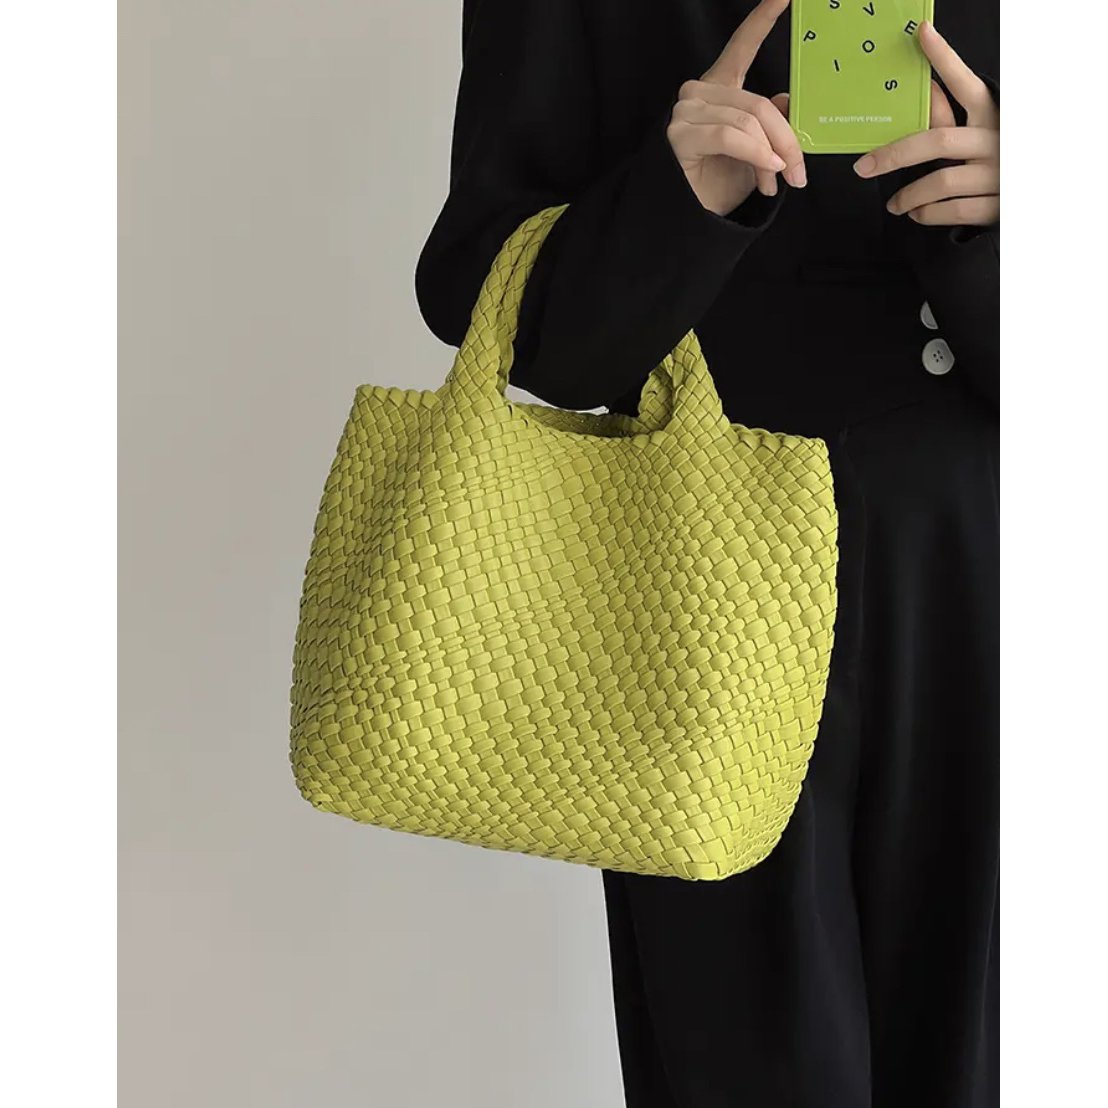 Handwoven leather tote bag for Women,Leather Shoulder Bag,Leather Handbag,Shopping Bag,Gift for mom,Gift gor her,Mother's Day gift